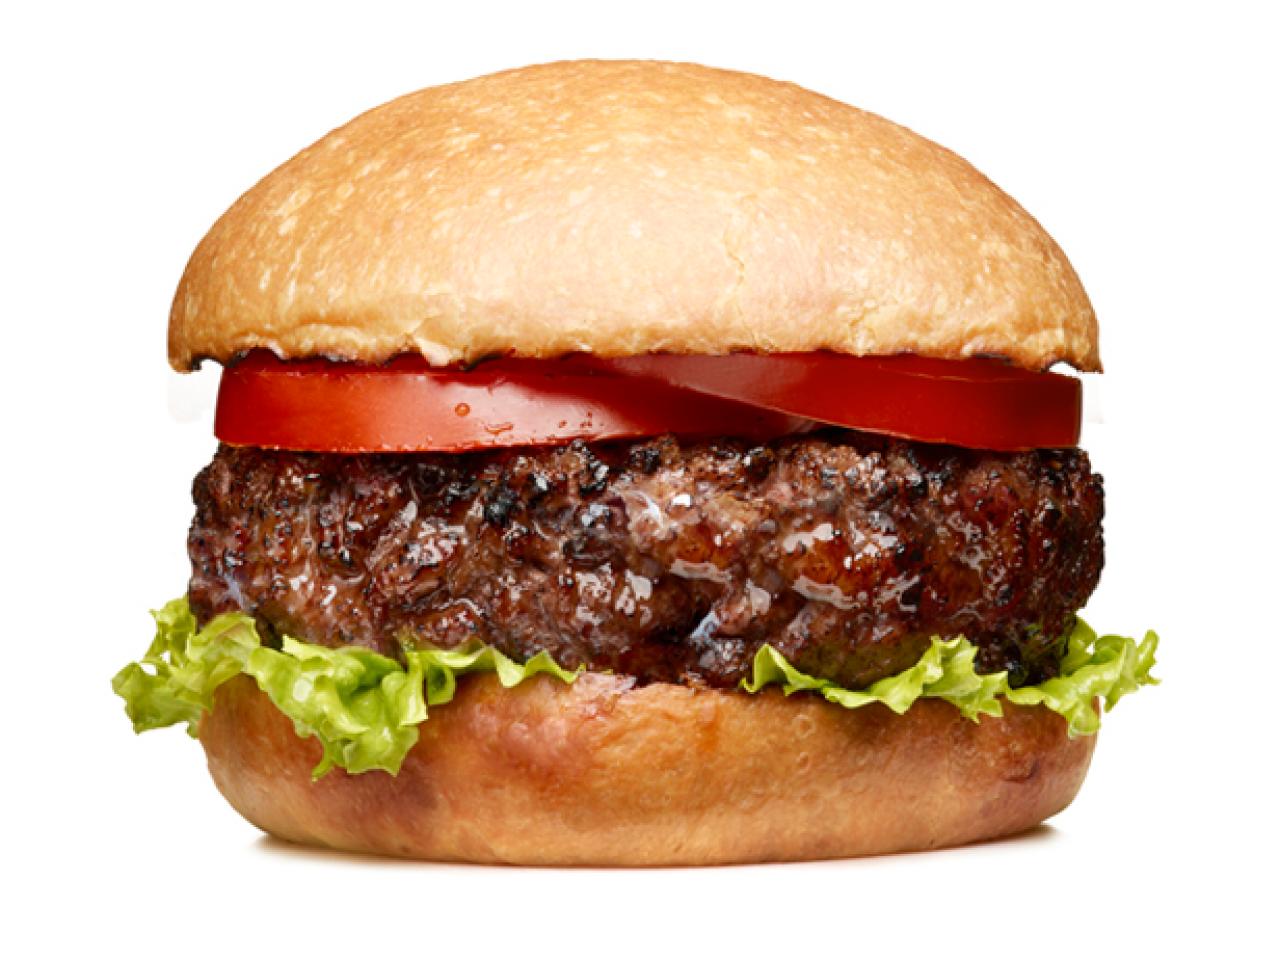 https://food.fnr.sndimg.com/content/dam/images/food/fullset/2012/5/4/2/FNM_060112-Grilled-Burger-Recipe_s4x3.jpg.rend.hgtvcom.1280.960.suffix/1371606262739.jpeg